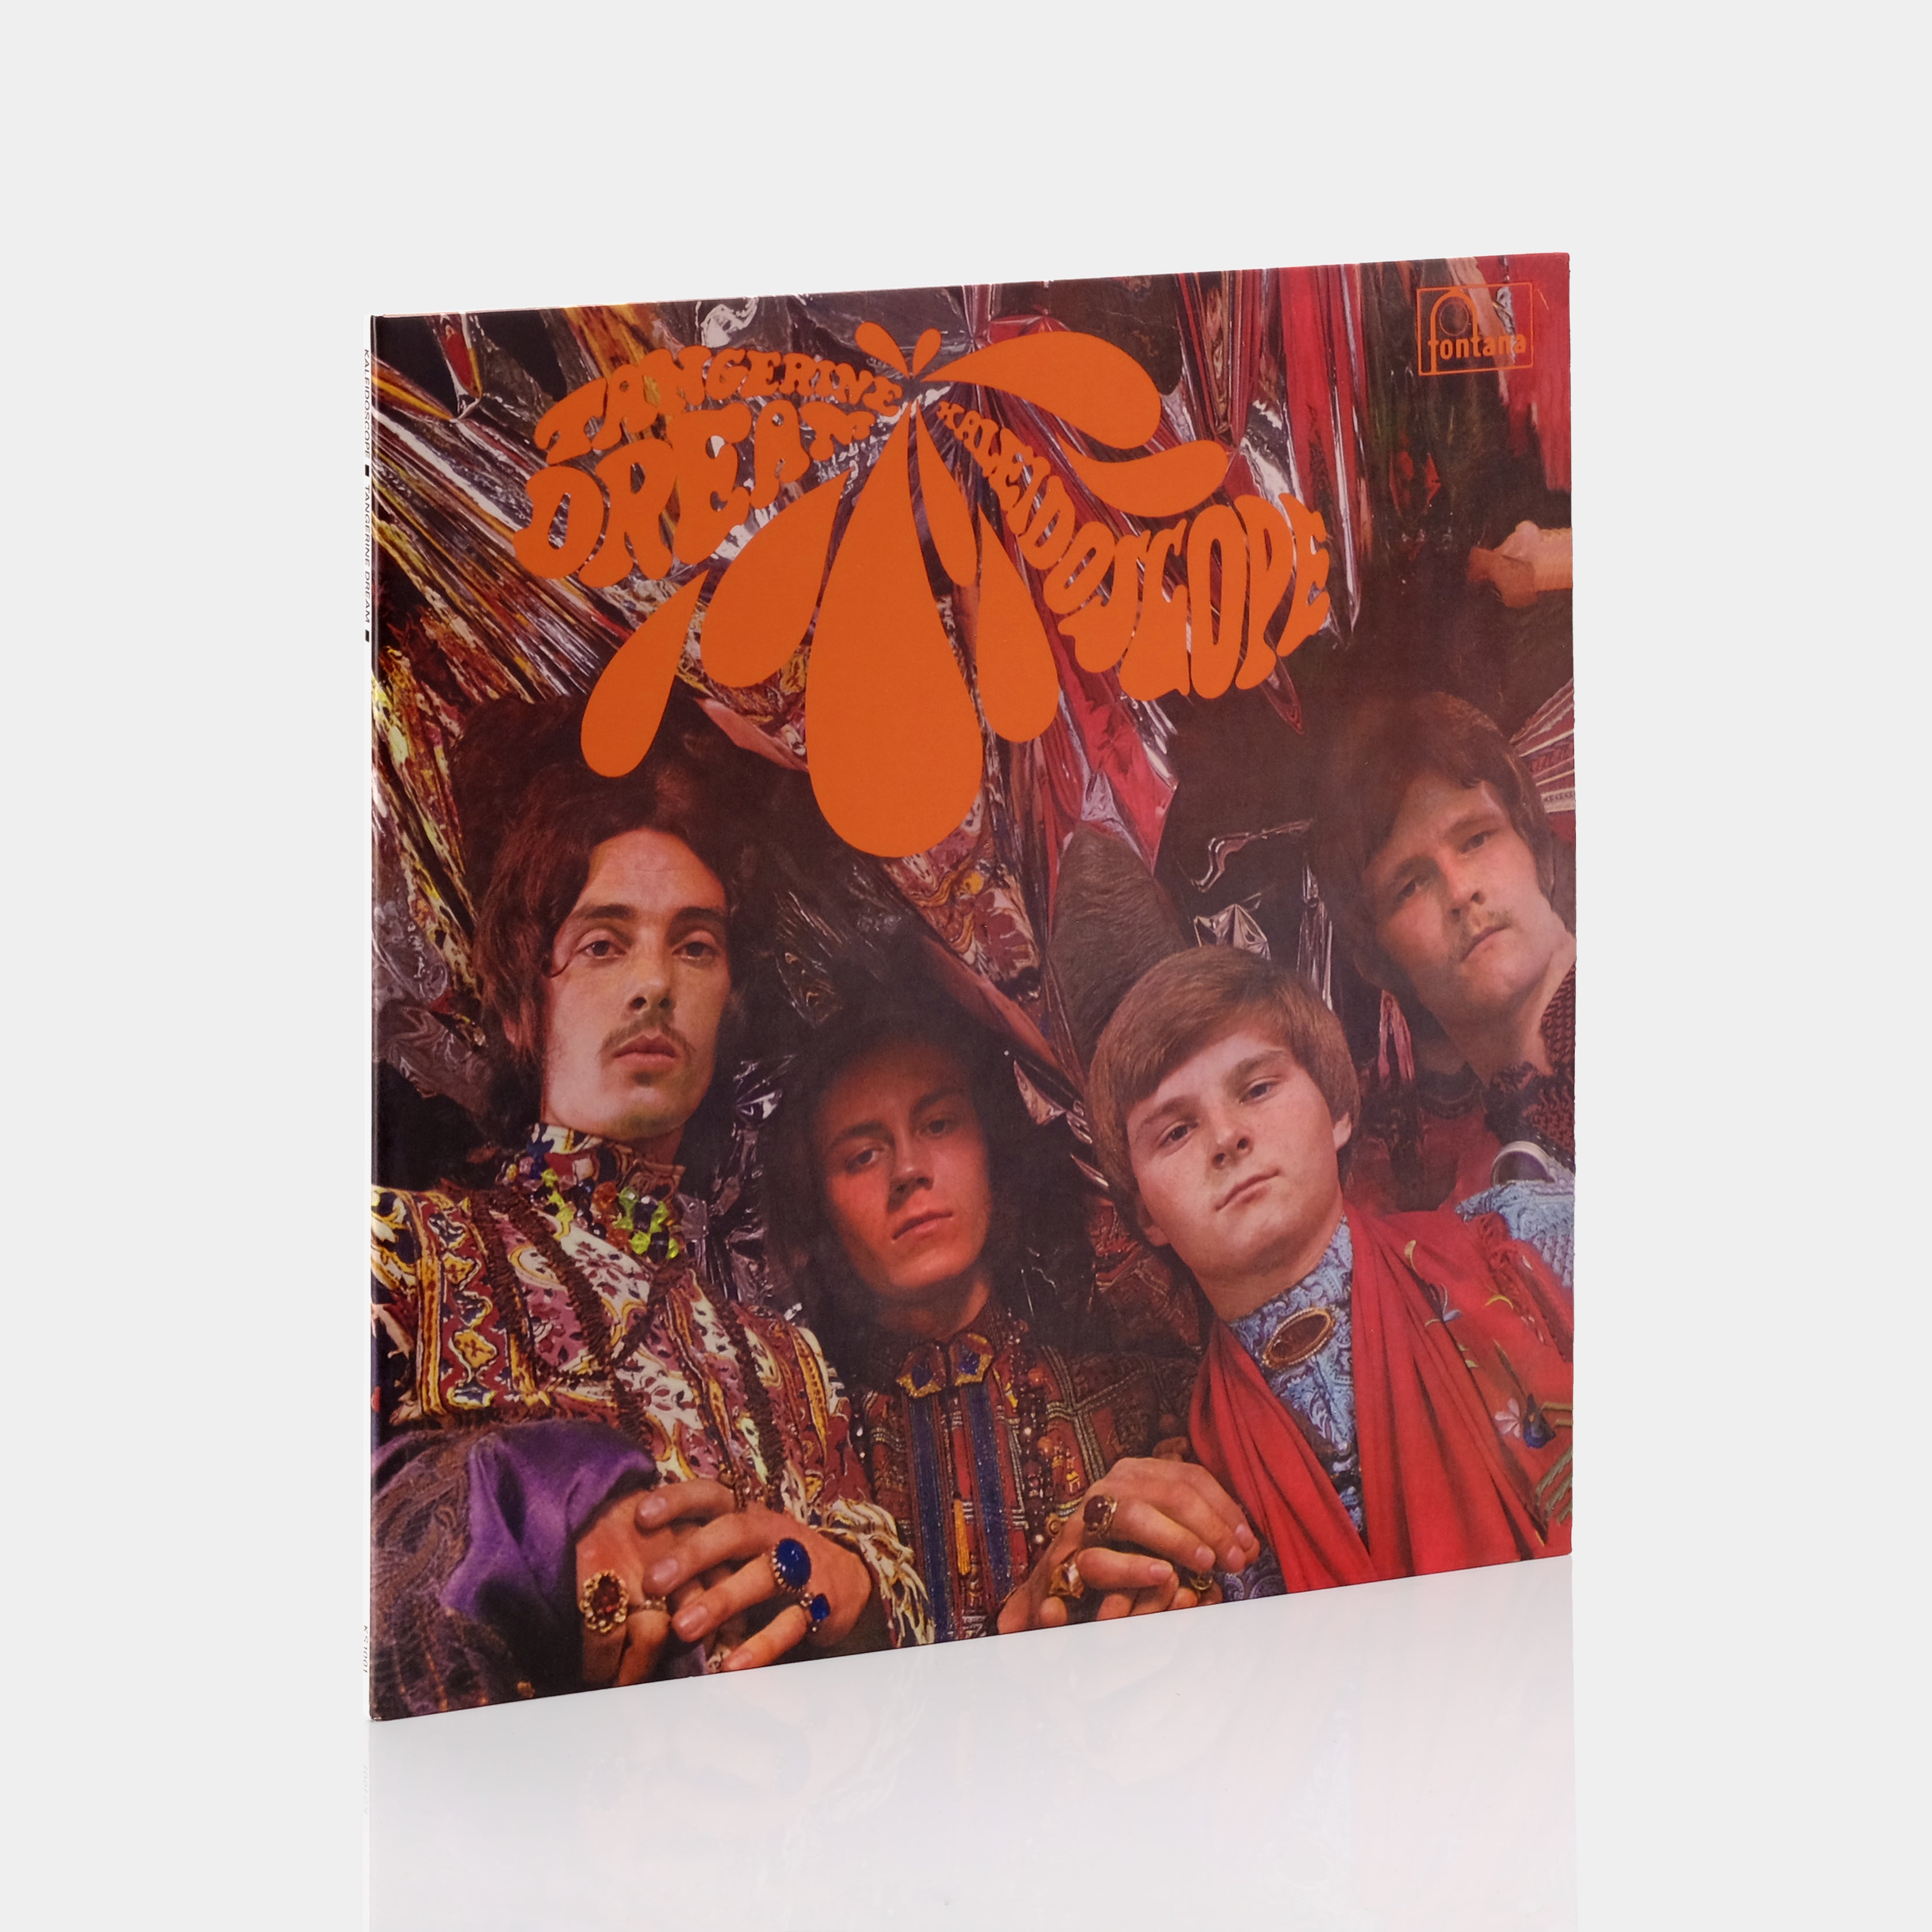 Kaleidoscope - Tangerine Dream LP Vinyl Record + 7" Single